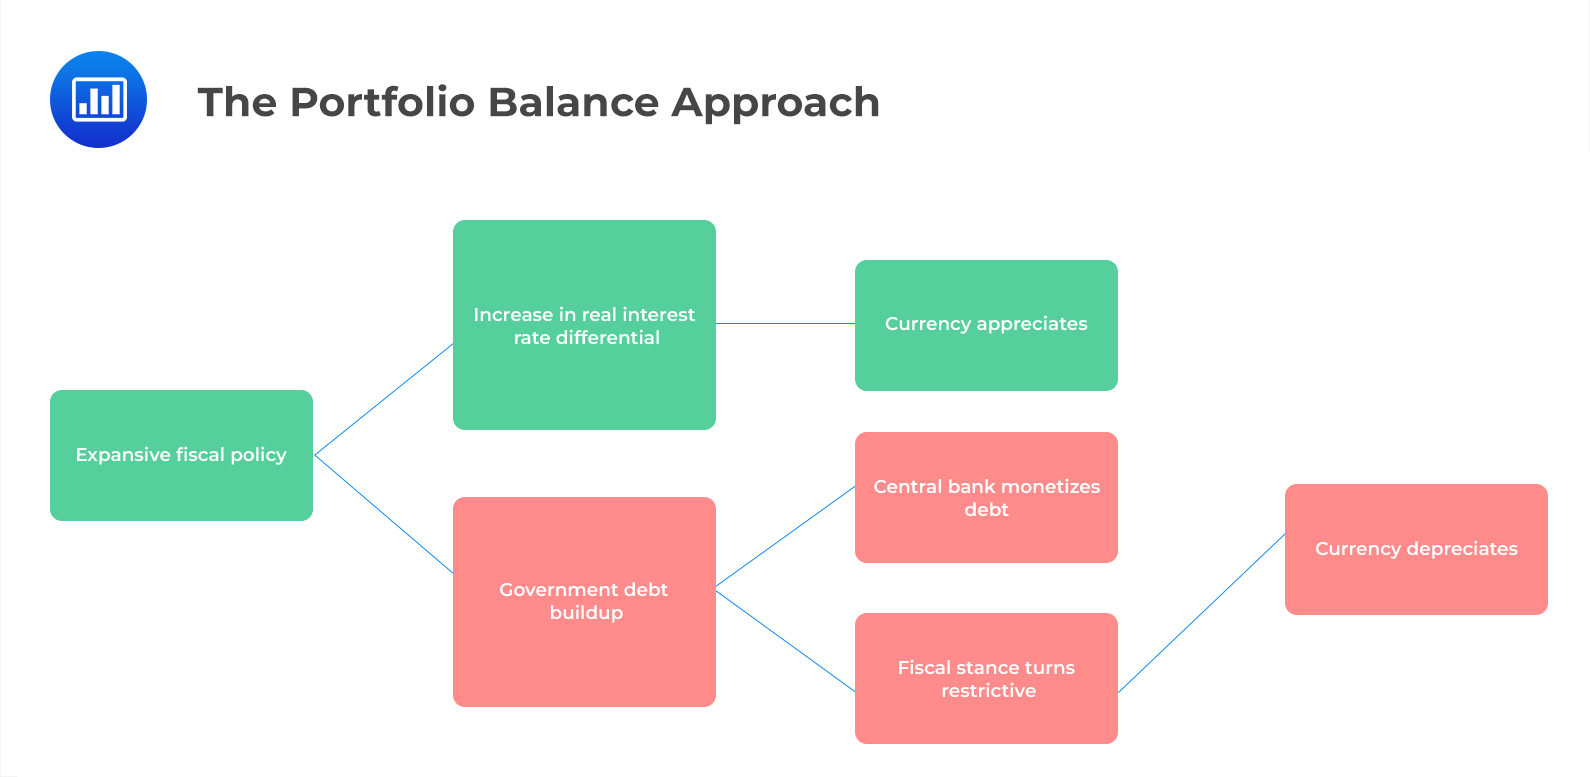 The Portfolio Balance Approach